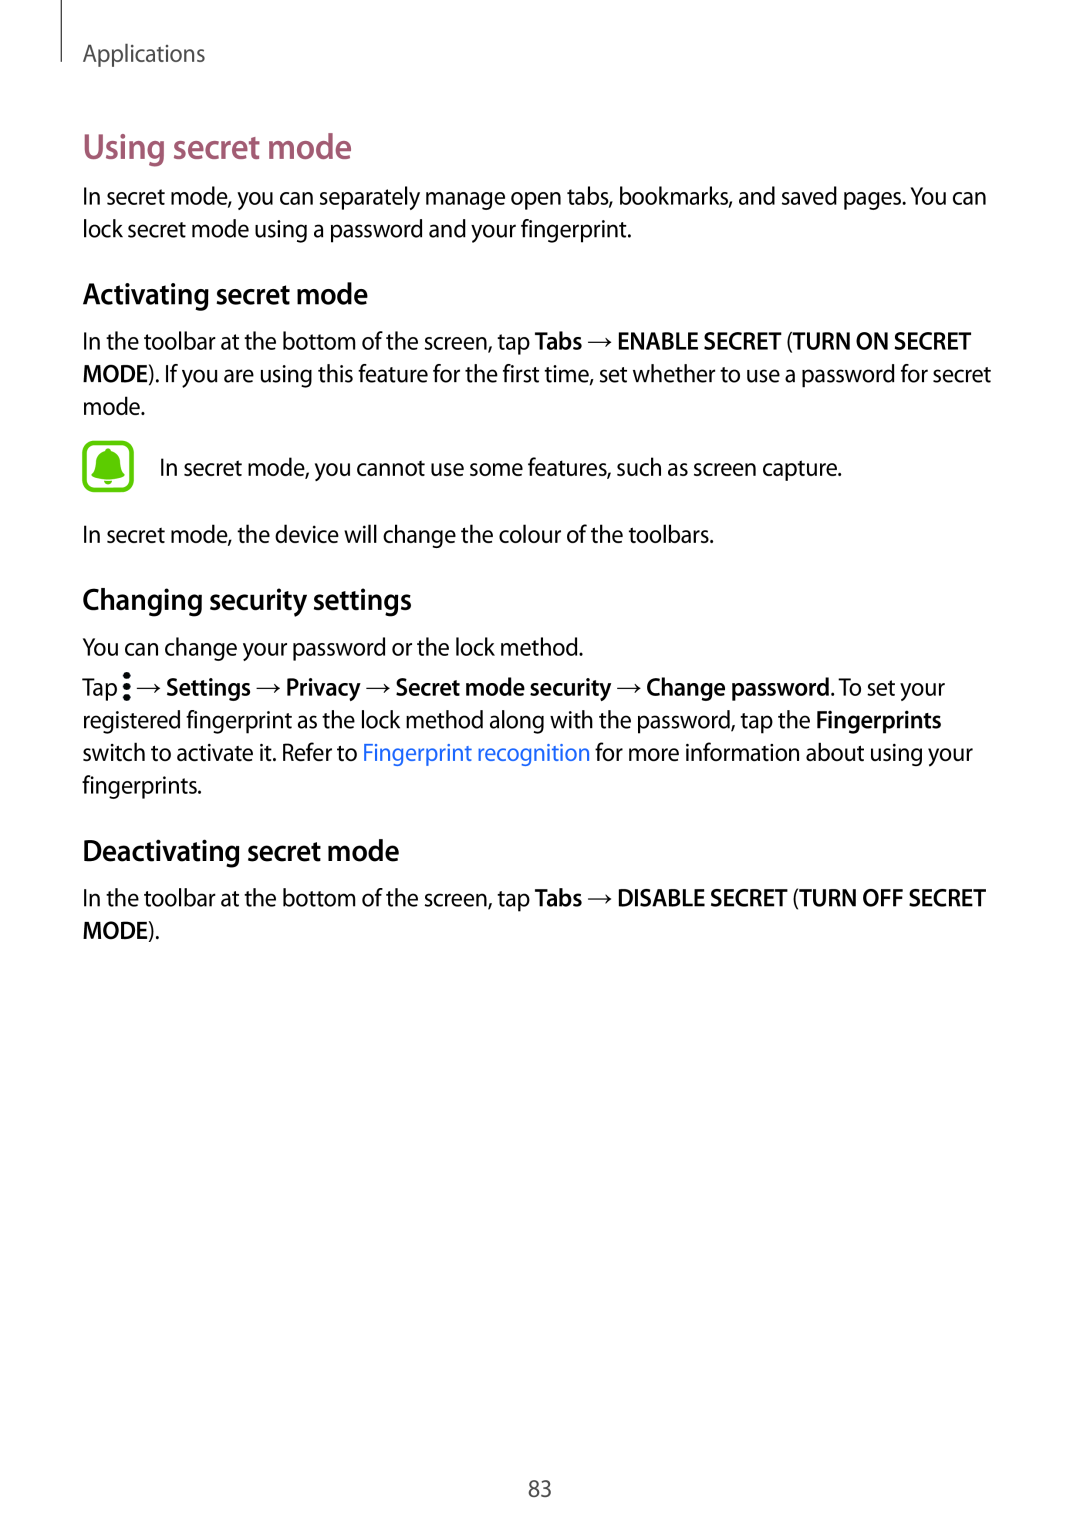 Samsung SM-G928FZKAMTL Using secret mode, Activating secret mode, Changing security settings, Deactivating secret mode 